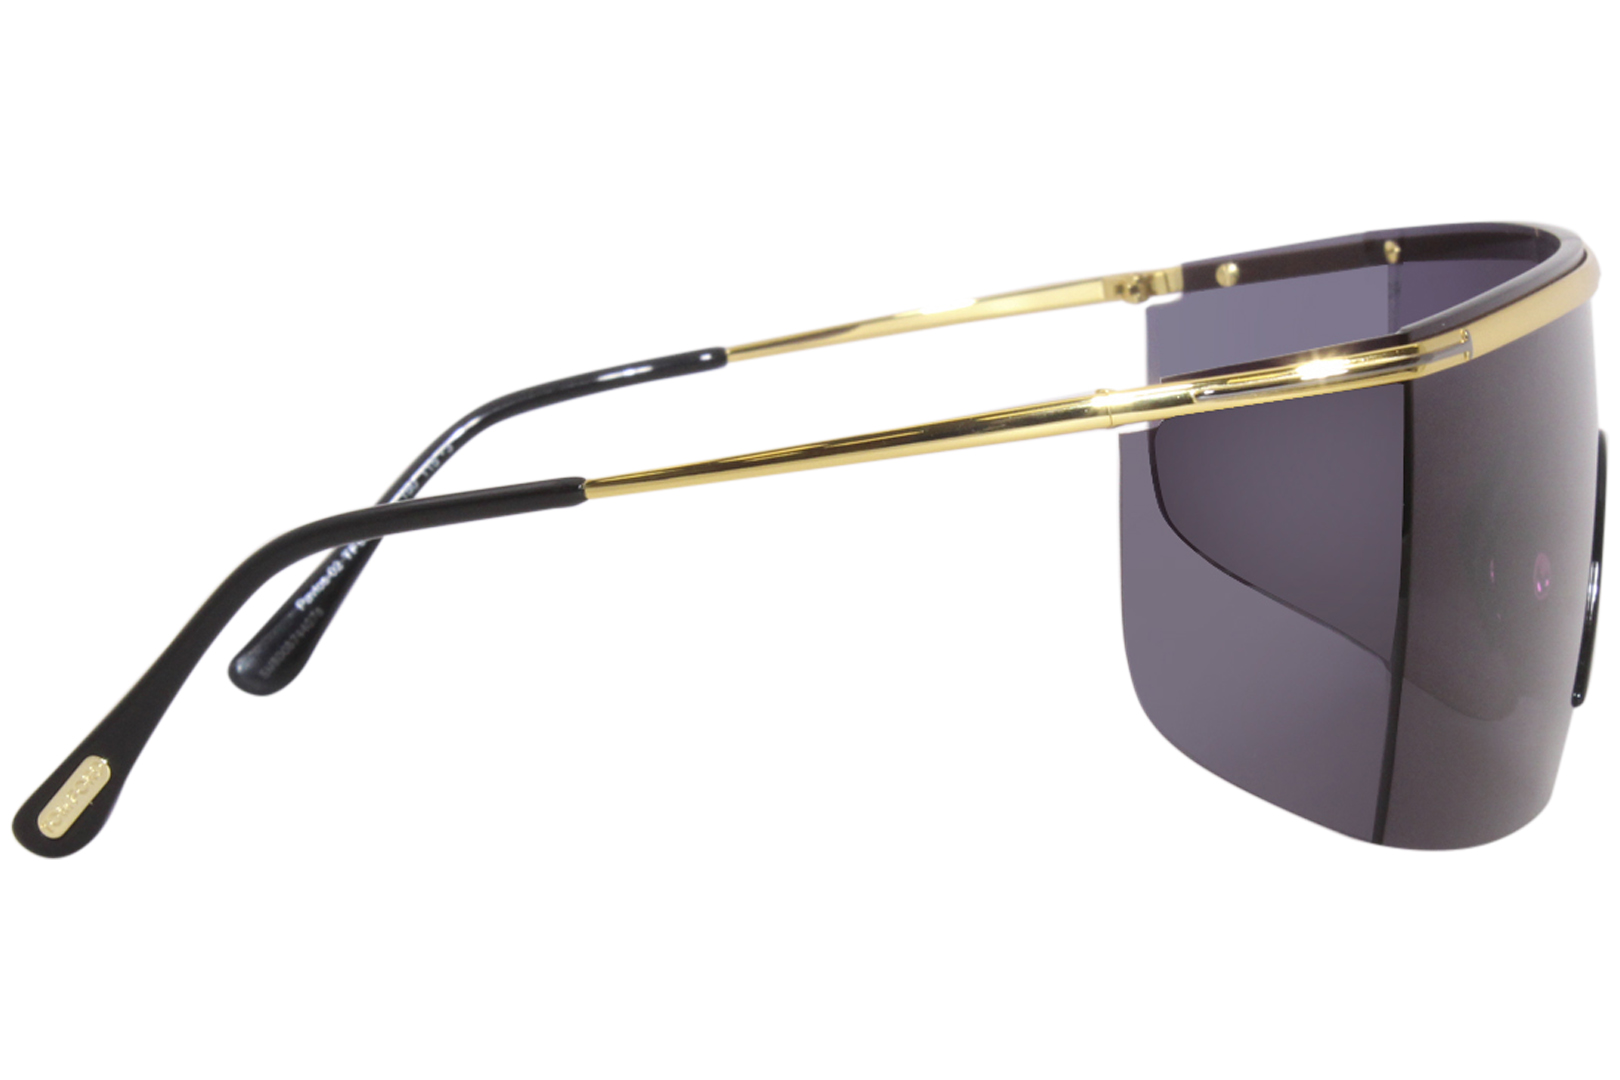 Tom Ford Pavlos-02 TF980 30A Sunglasses Men's Shiny Deep Gold/Grey Shield |  